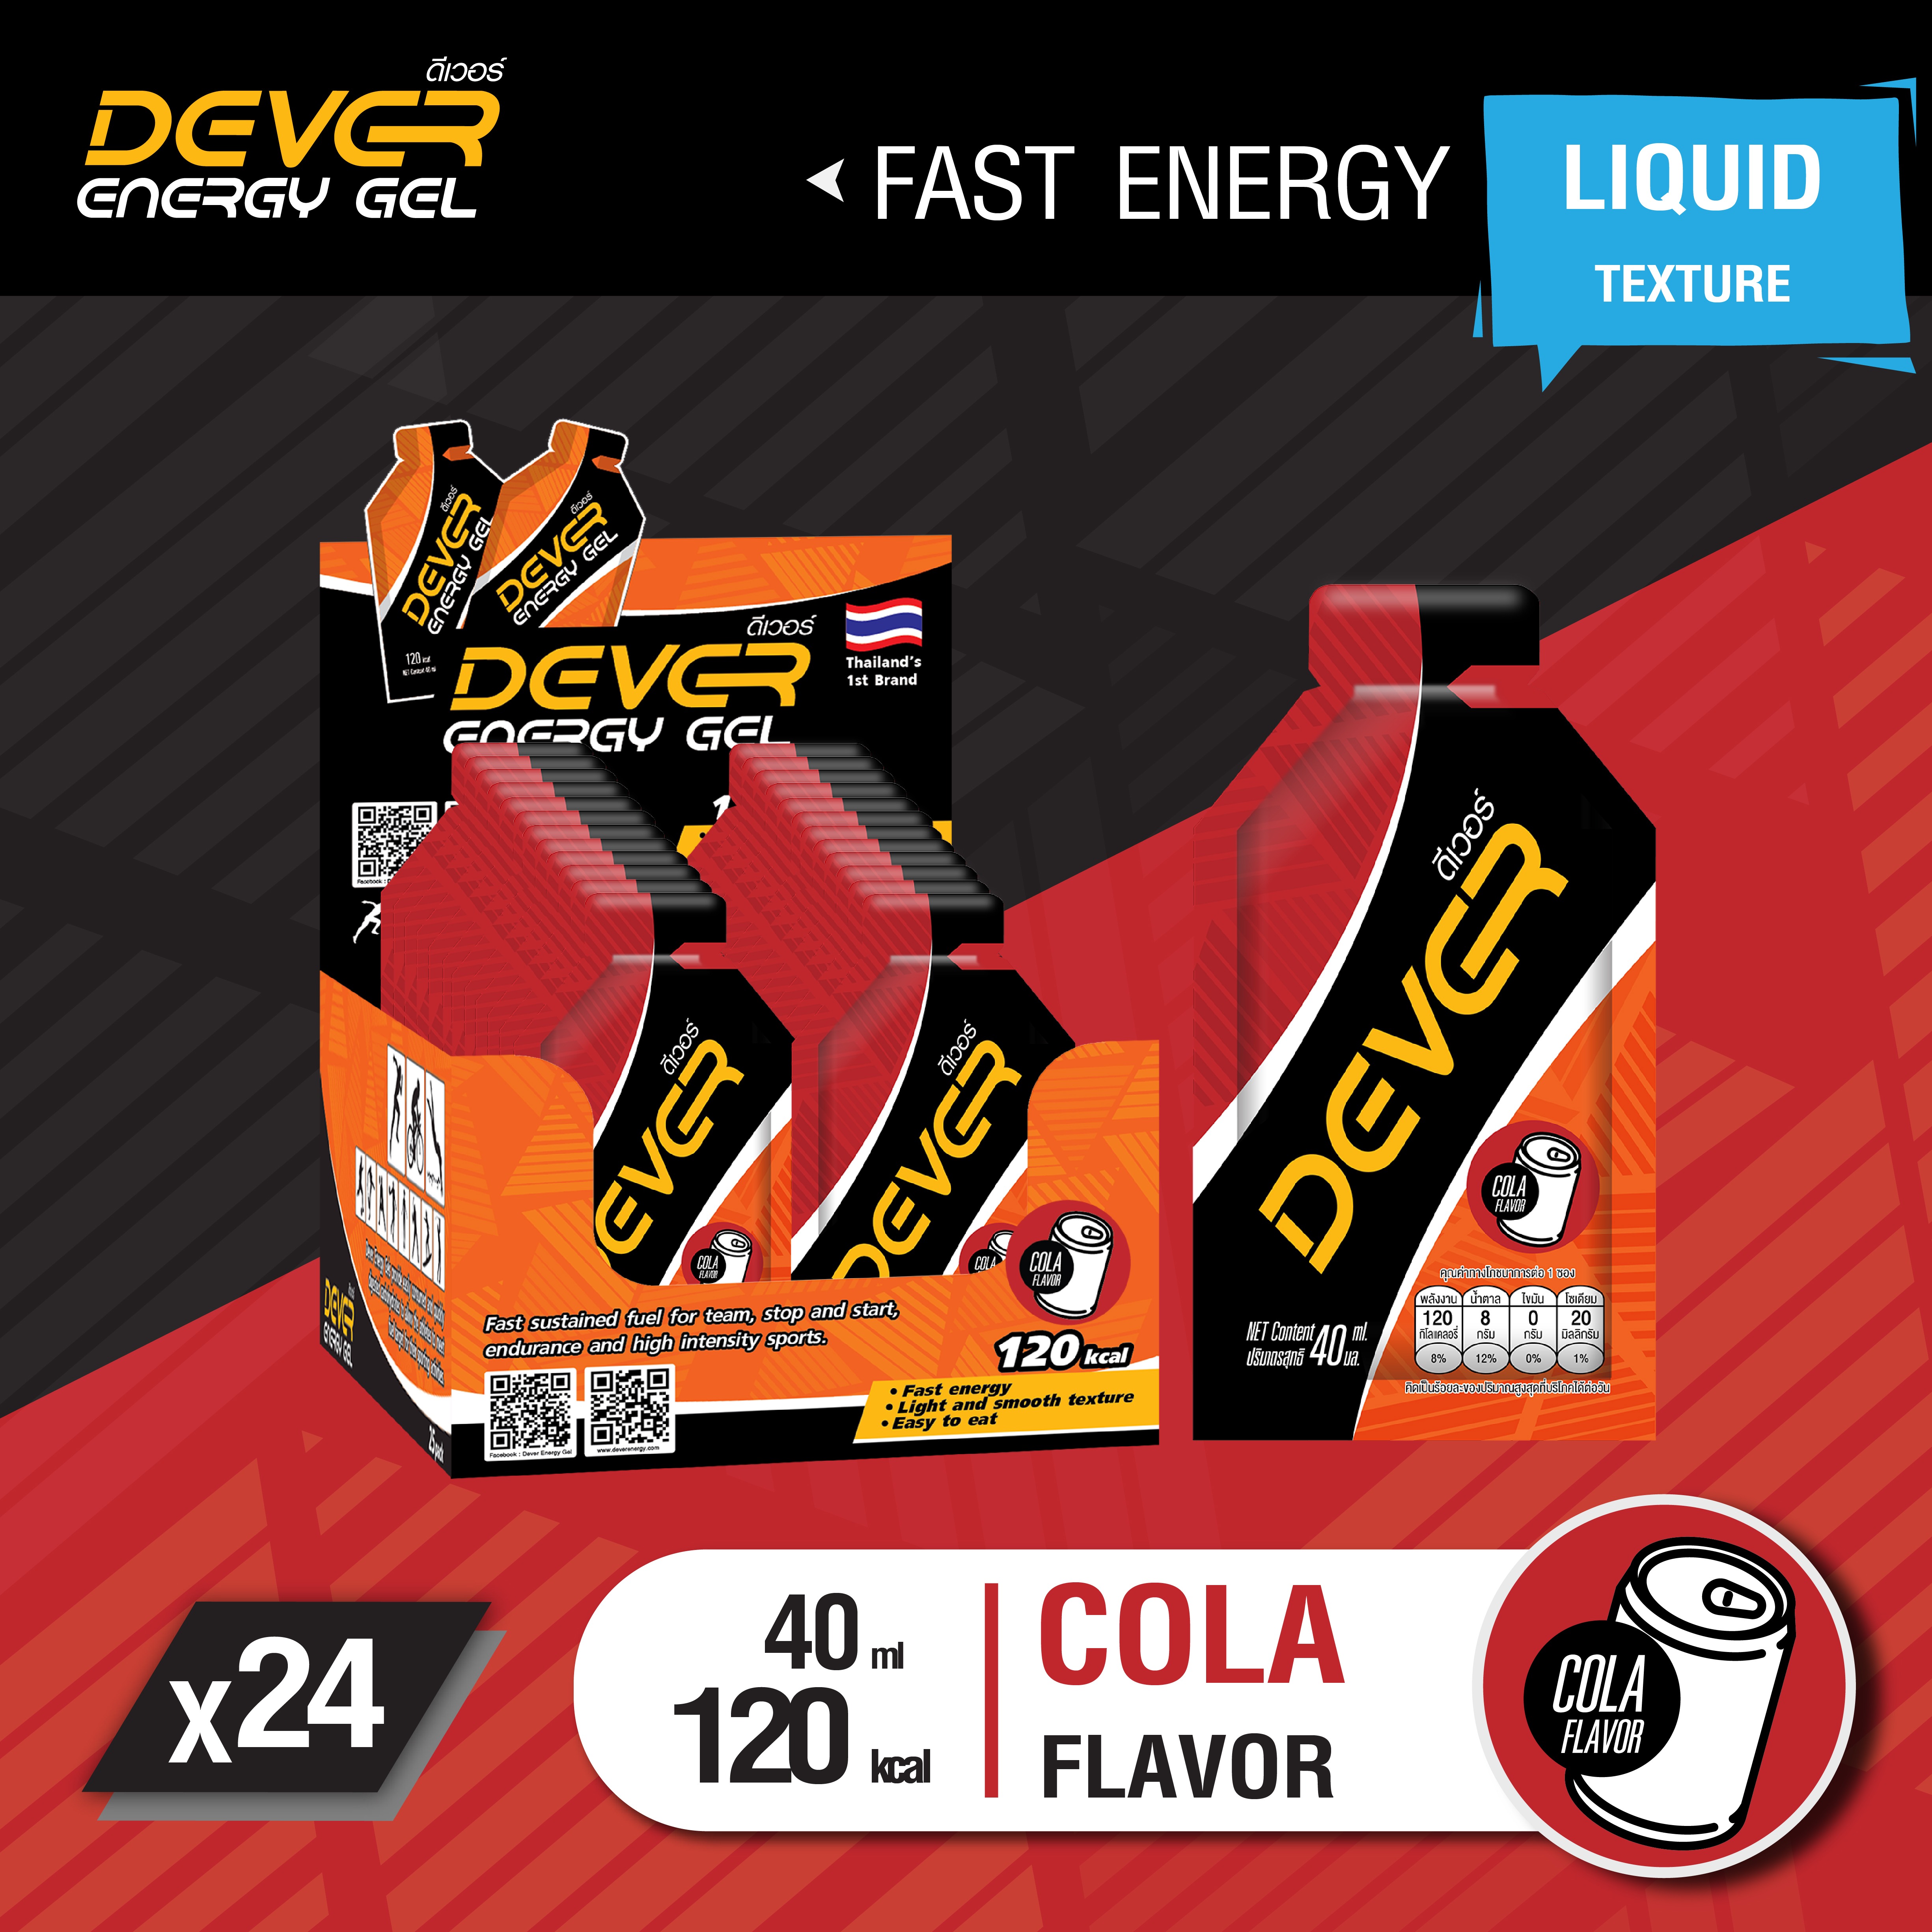 DEVER energy gel (vital source of energy) ดีเวอร์ เจลให้พลังงาน เจลพลังงาน เจลเพิ่มพลังงาน เกลือแร่ สำหรับนักกีฬา นักวิ่ง ออกกำลังกาย > 40 ML โคล่า 24 ซอง